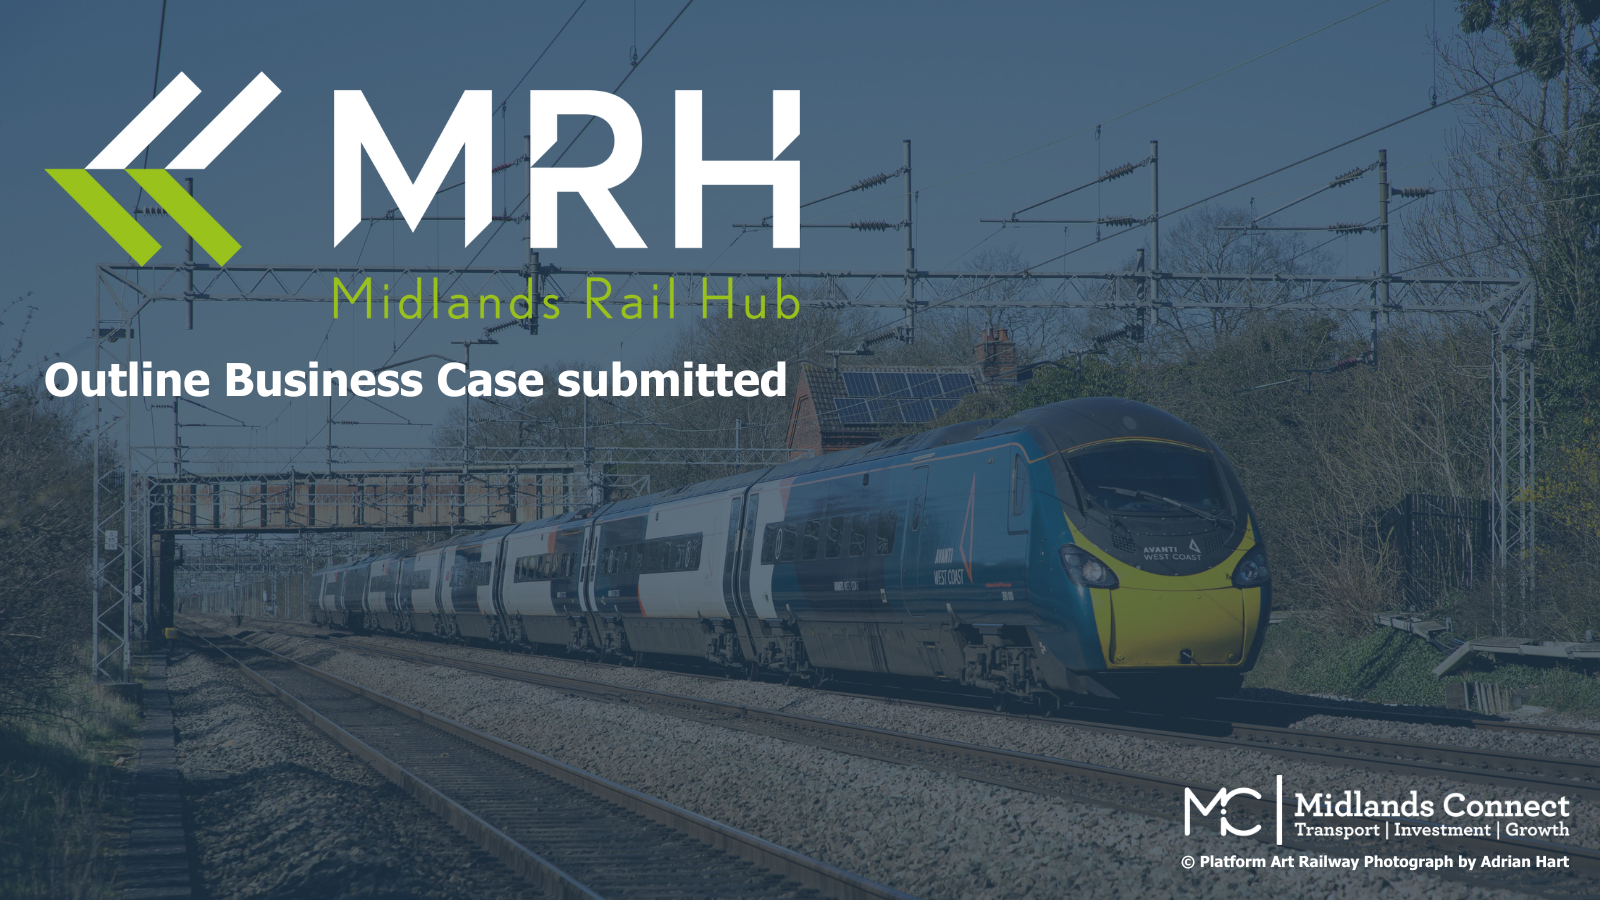 Midlands Rail Hub